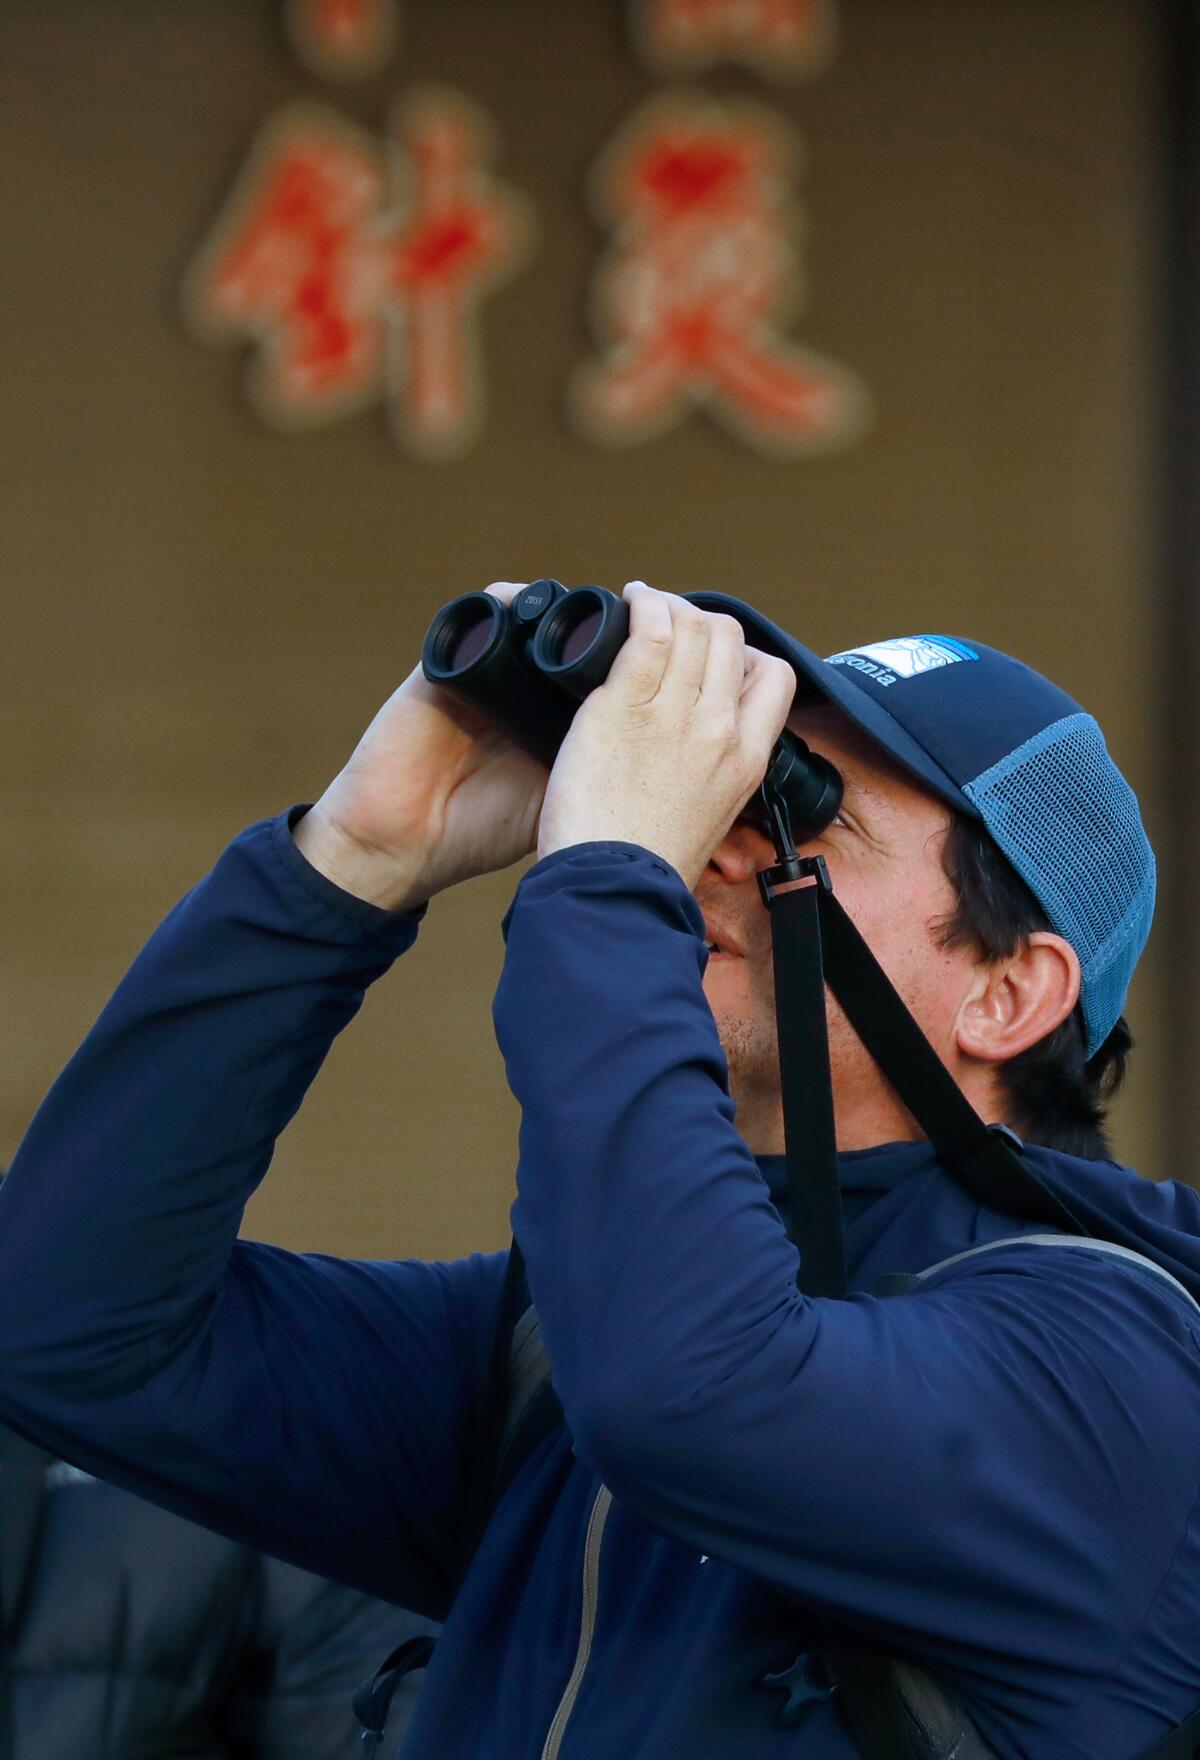 A man wearing a blue jacket and blue baseball cap, looking up through binoculars.